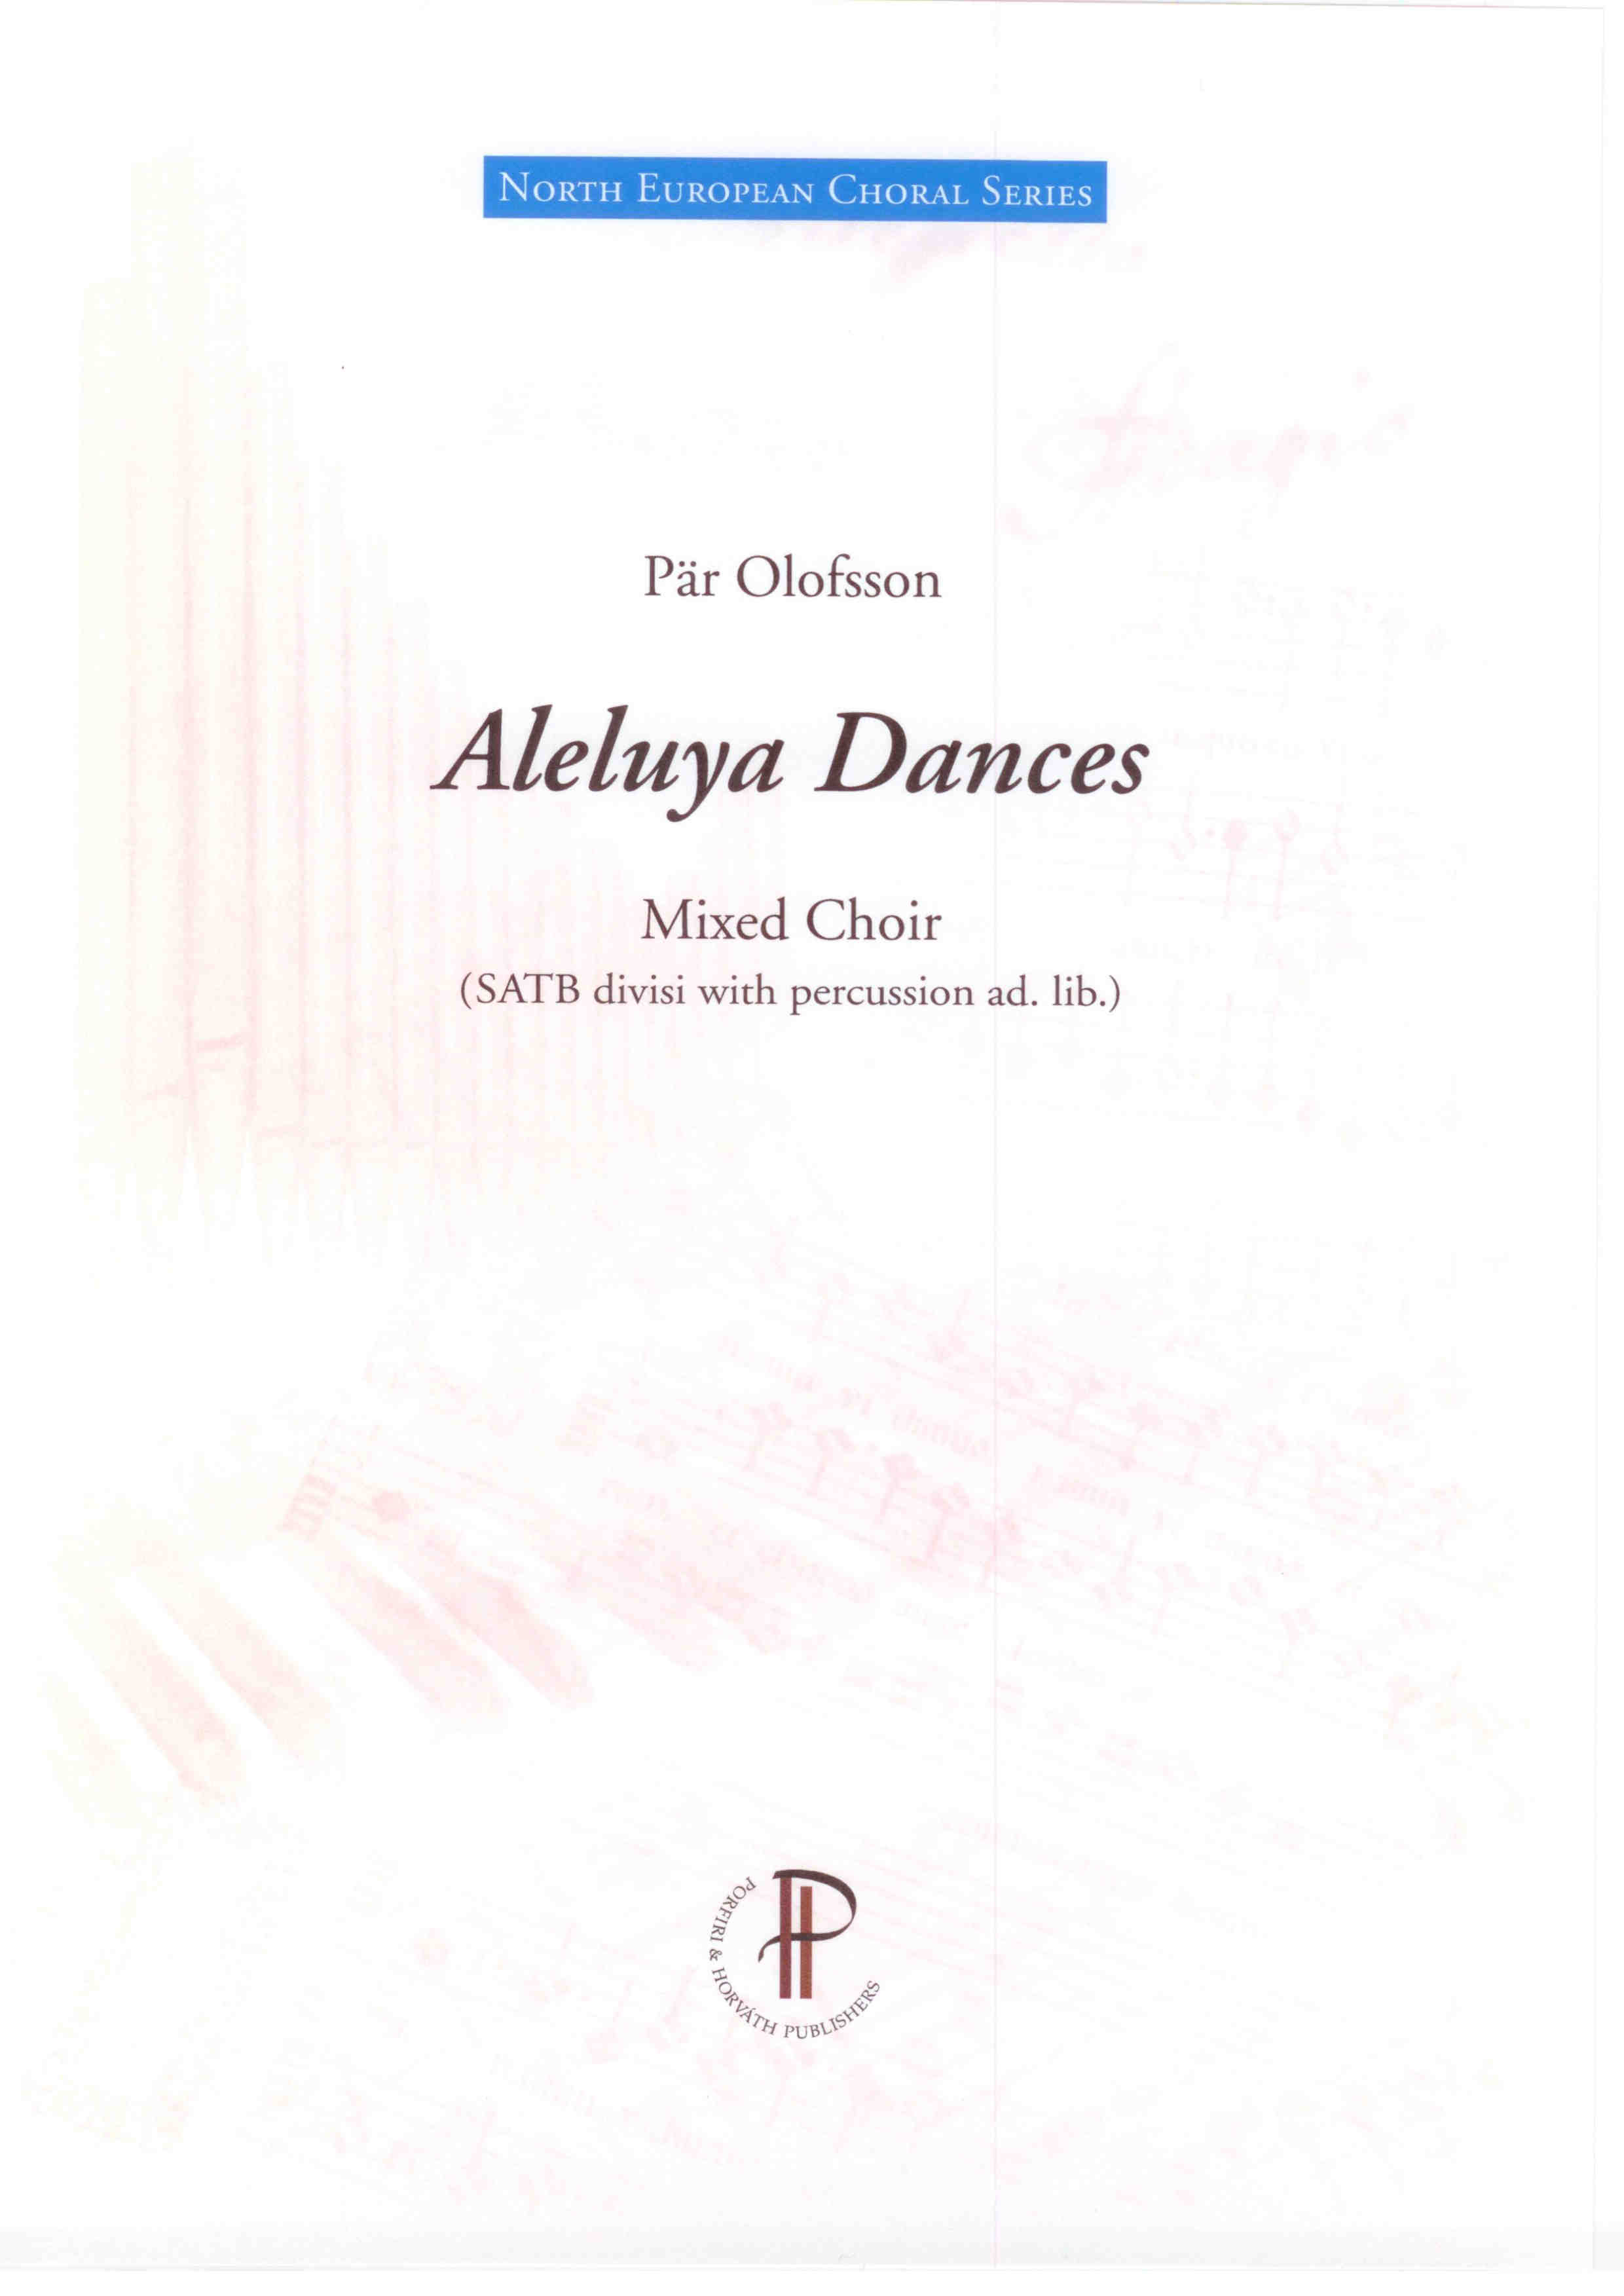 Aleluya dances - Show sample score